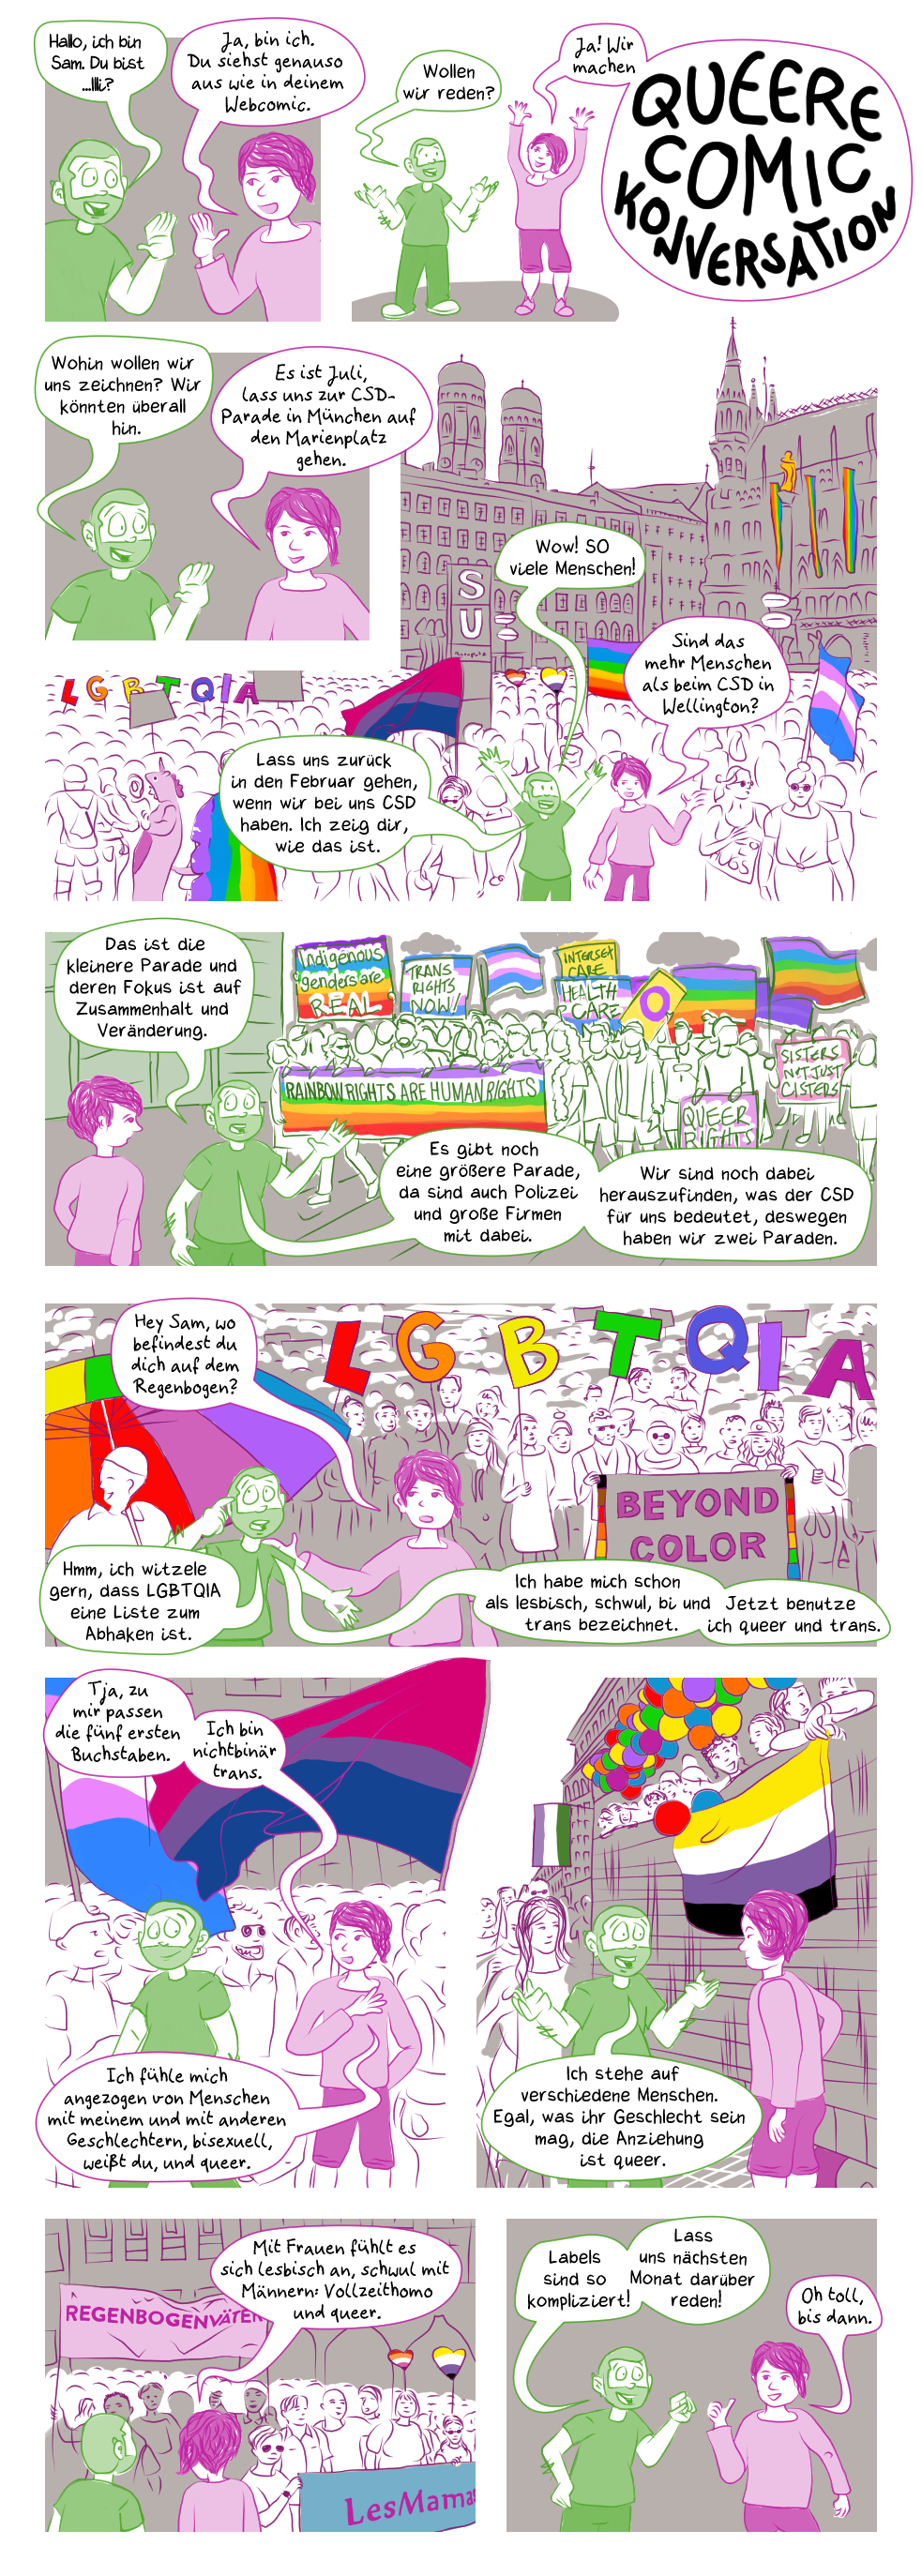 visuelles Comic: Queere Comic Konversation: Juli - CSD Parade, rein text-basiertes Comic folgt nach den Anmerkungen